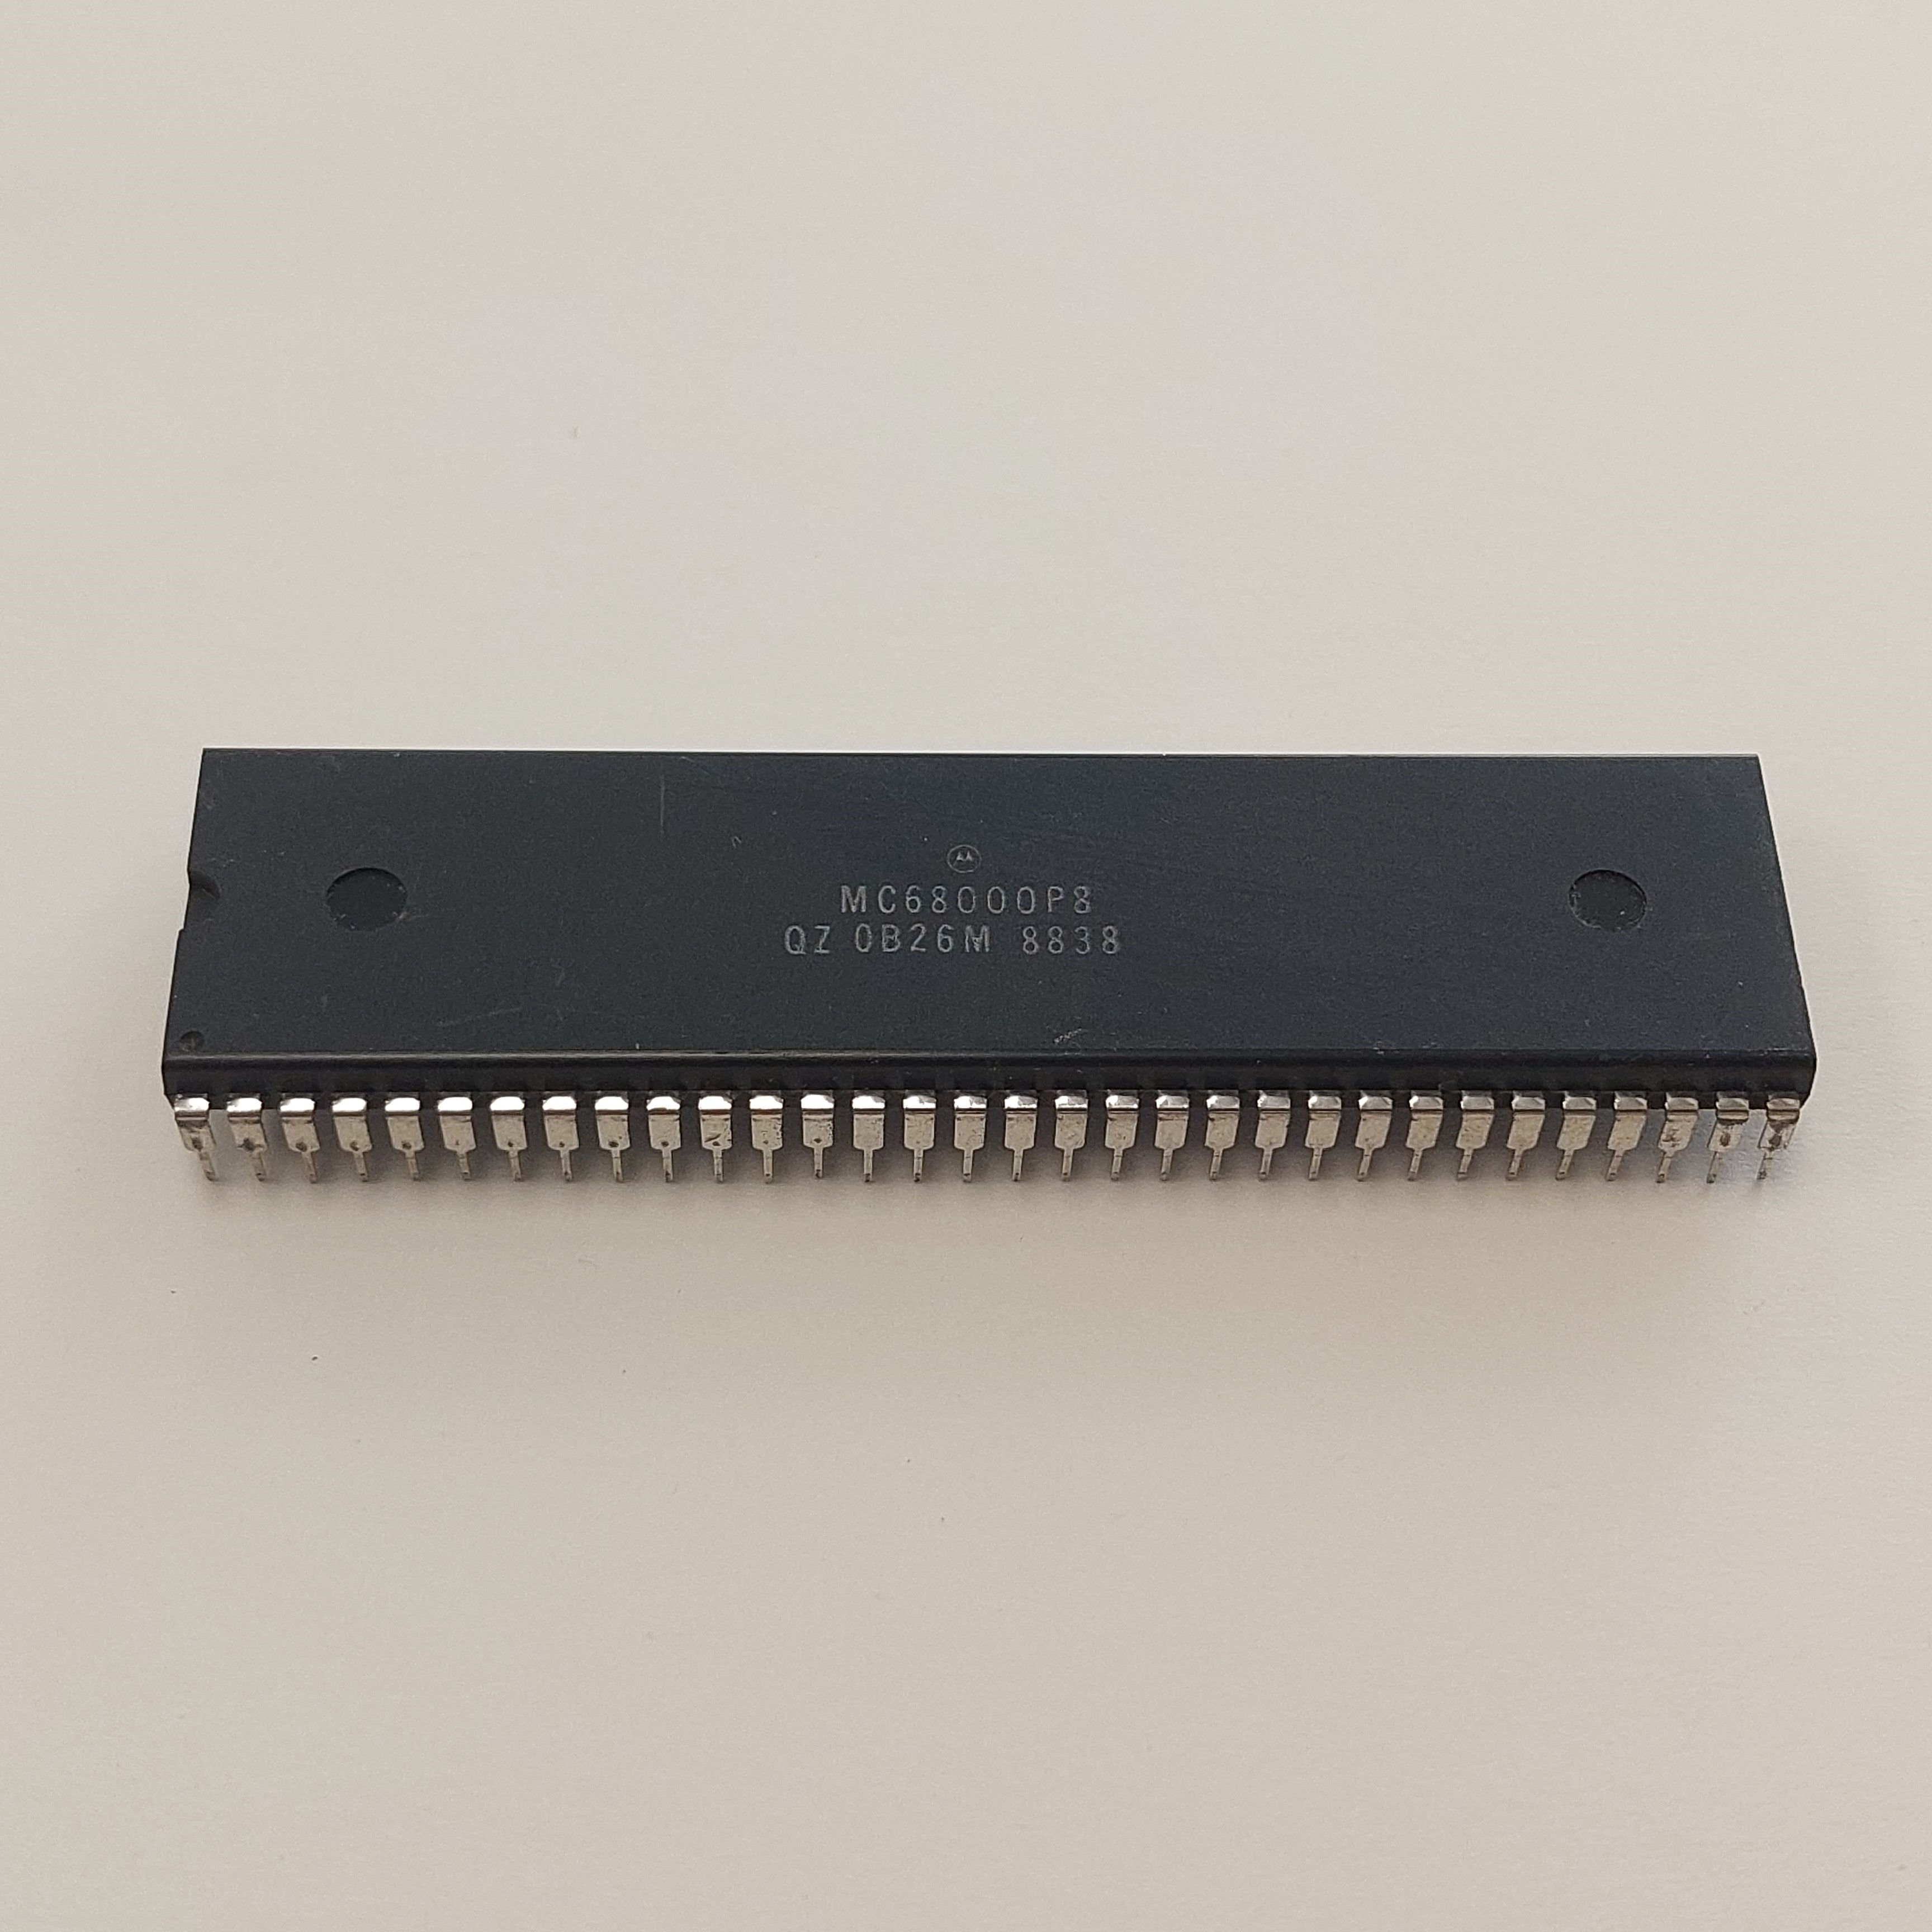 MC68000P8 MOTOROLA INTEGRATED CIRCUIT X1PC